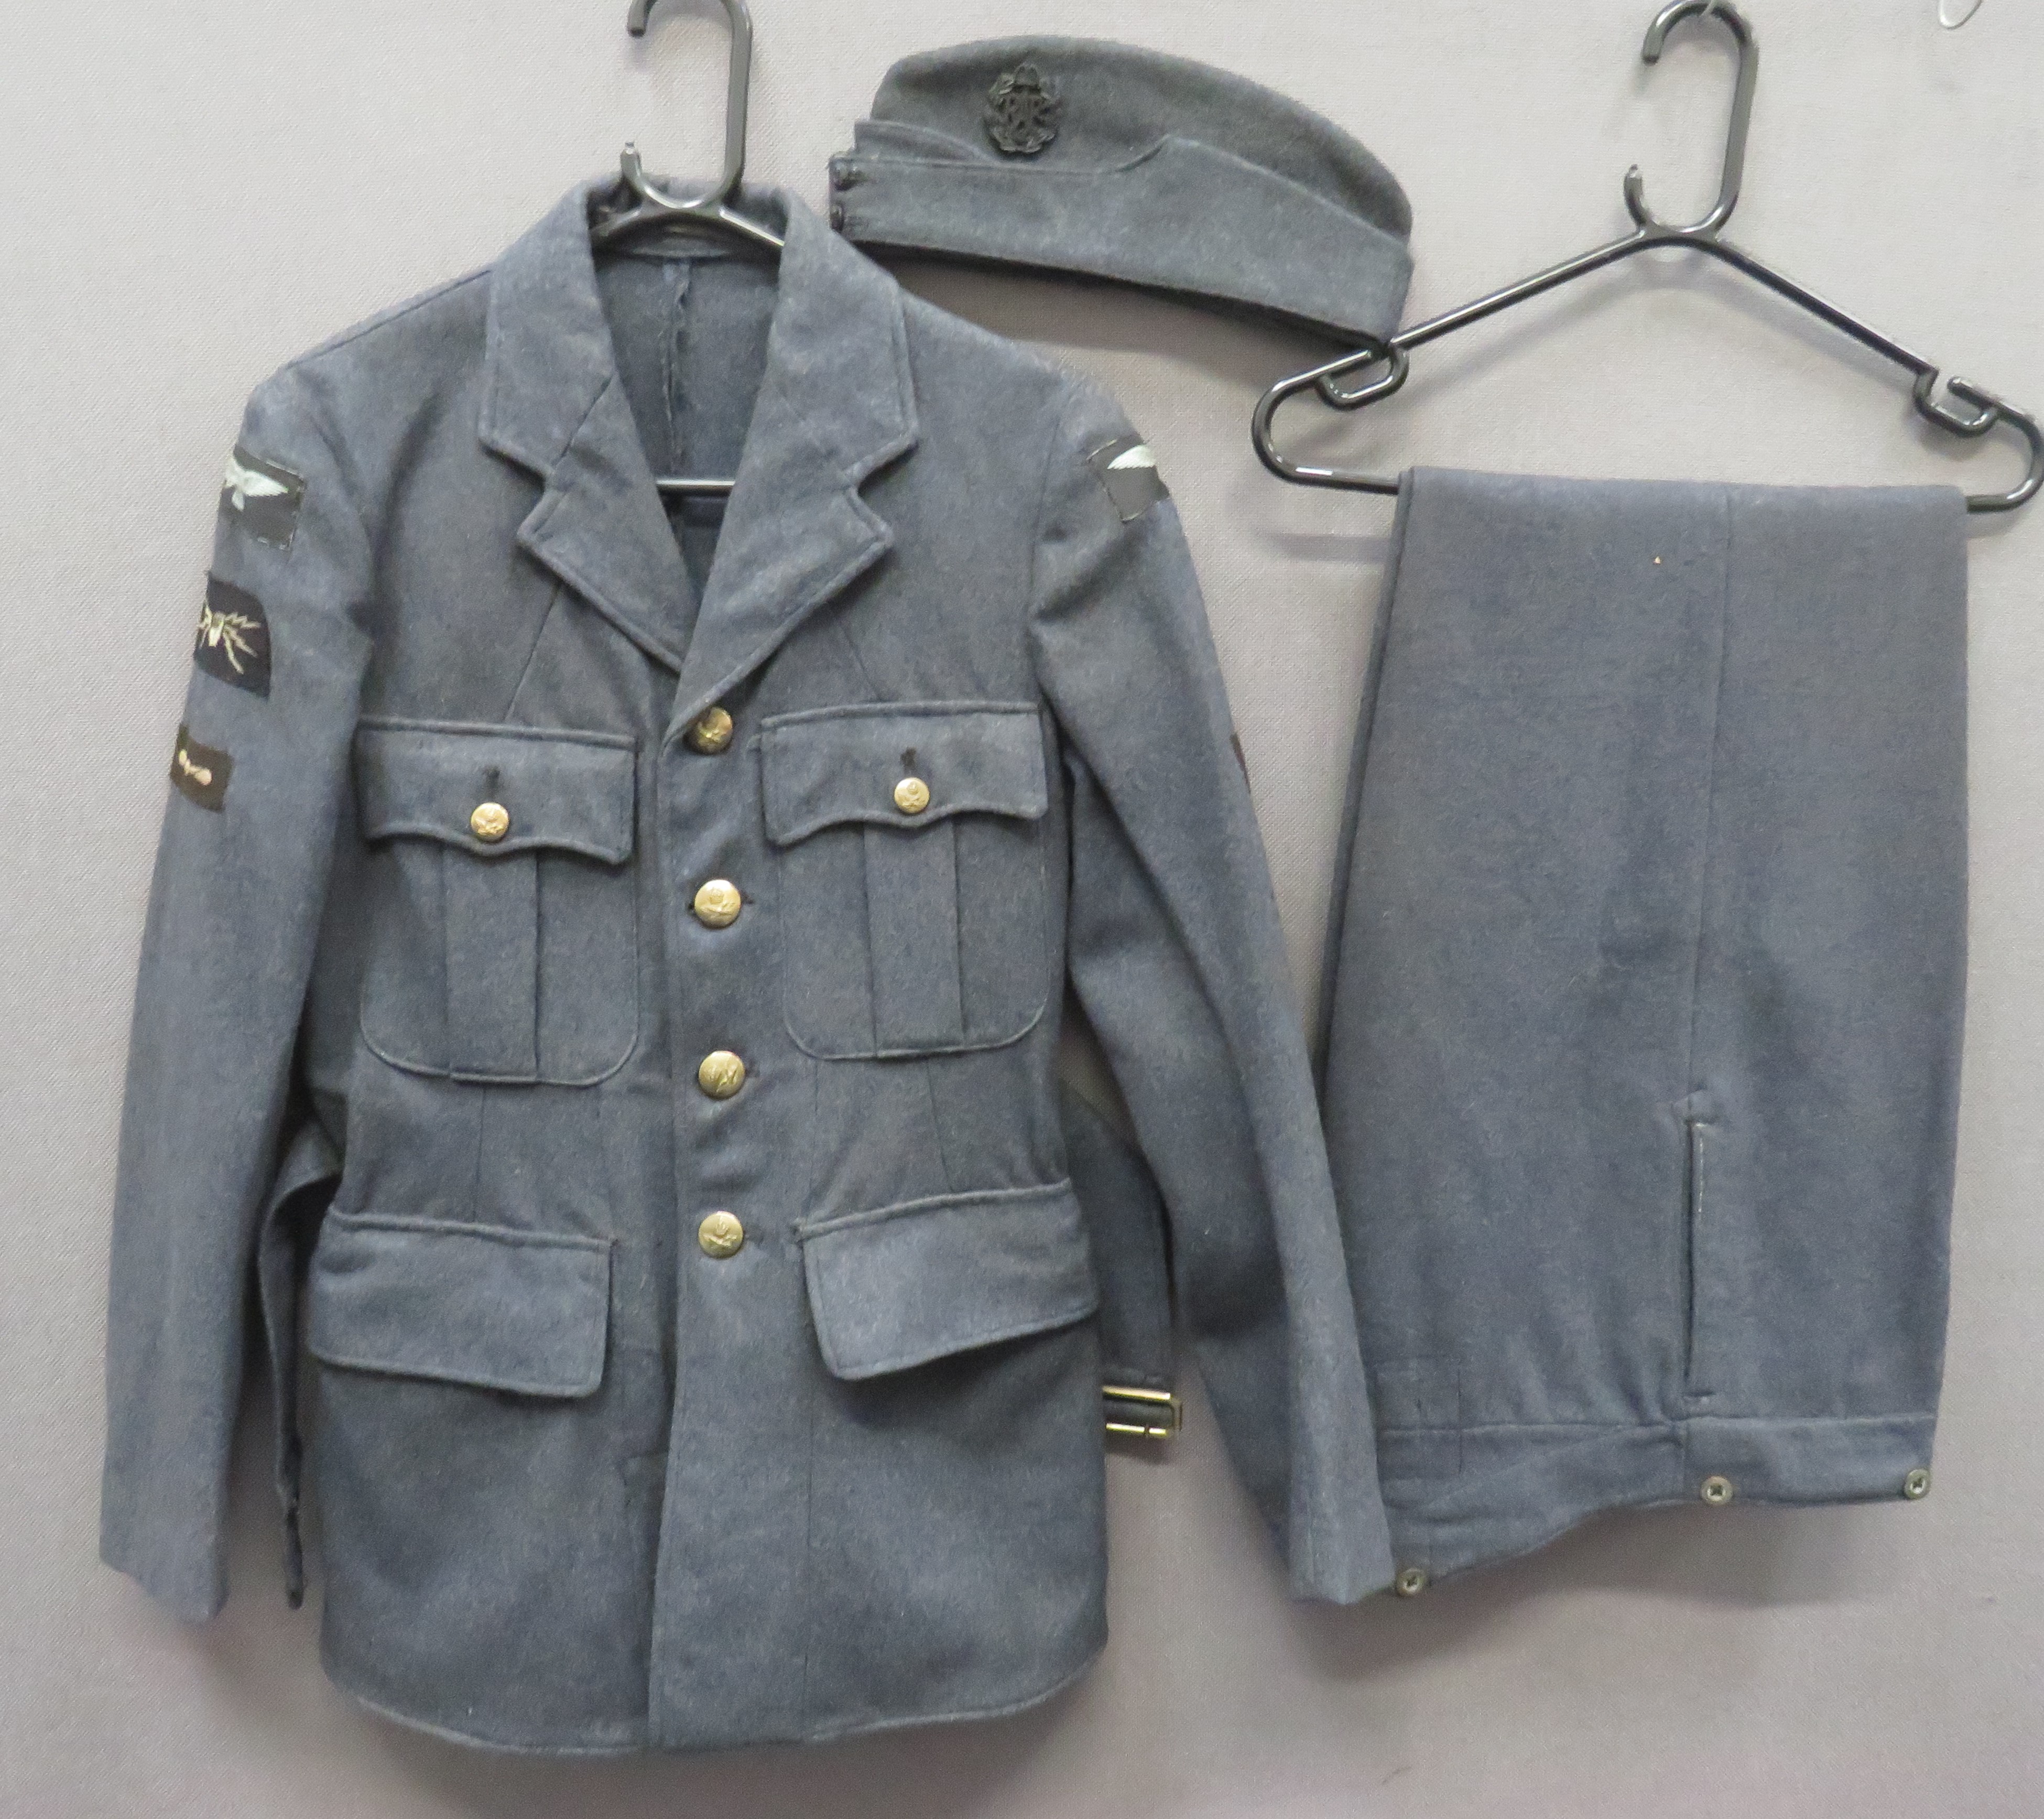 WW2 RAF Other Ranks Service Dress Uniform blue grey woollen, single breasted, open collar tunic.